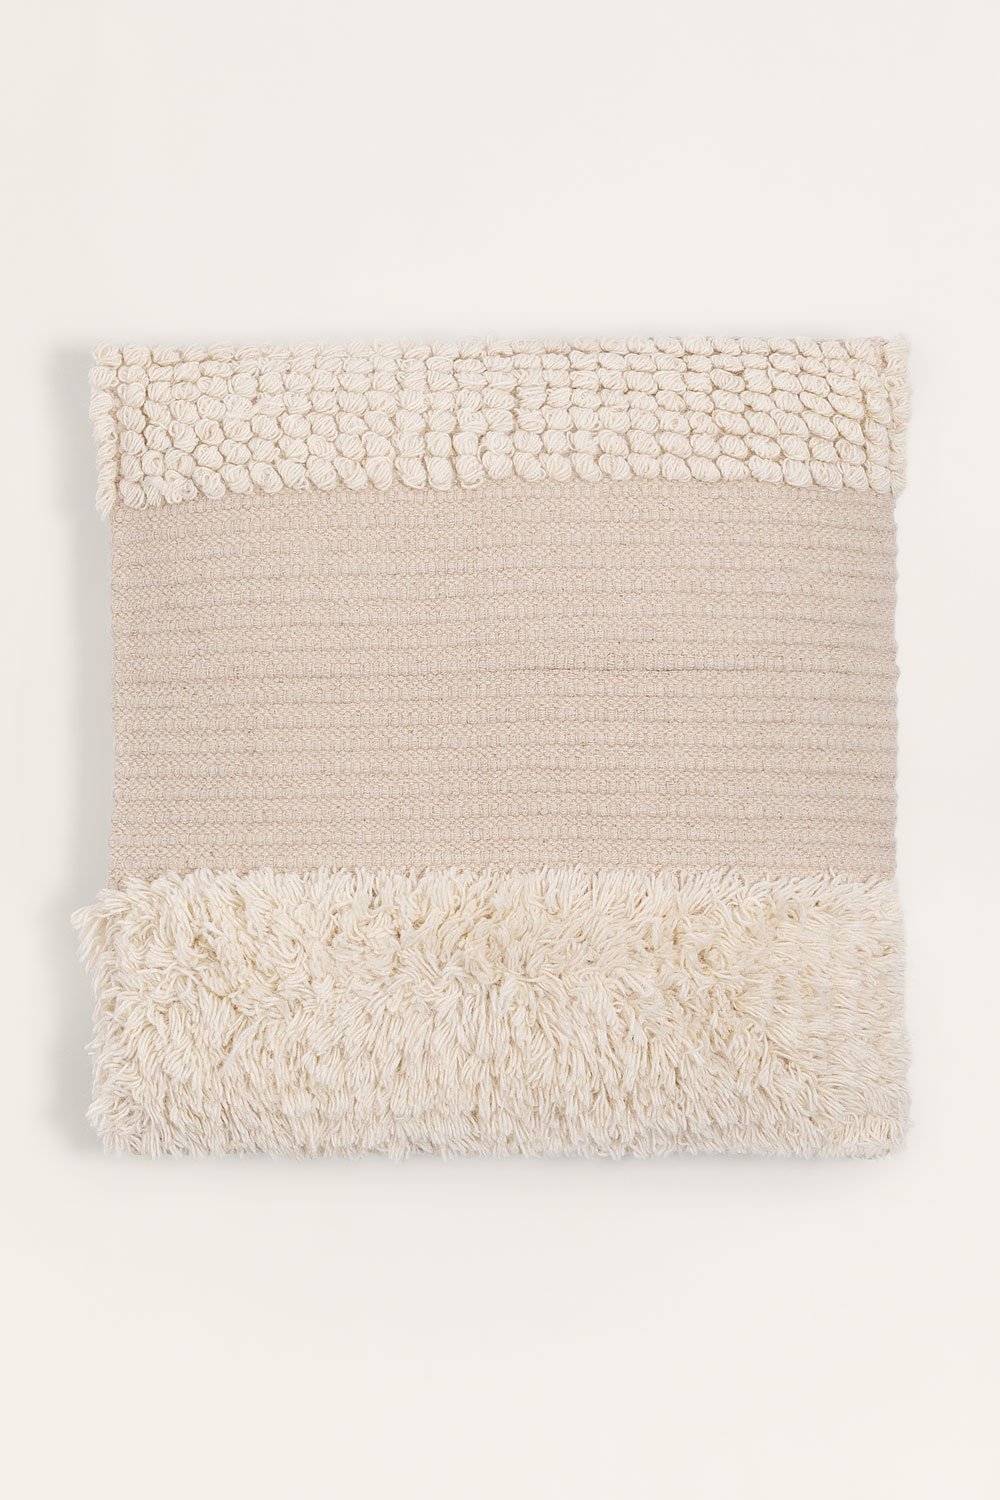 Square Cotton Cushion (50x50 cm) Pivit, gallery image 1